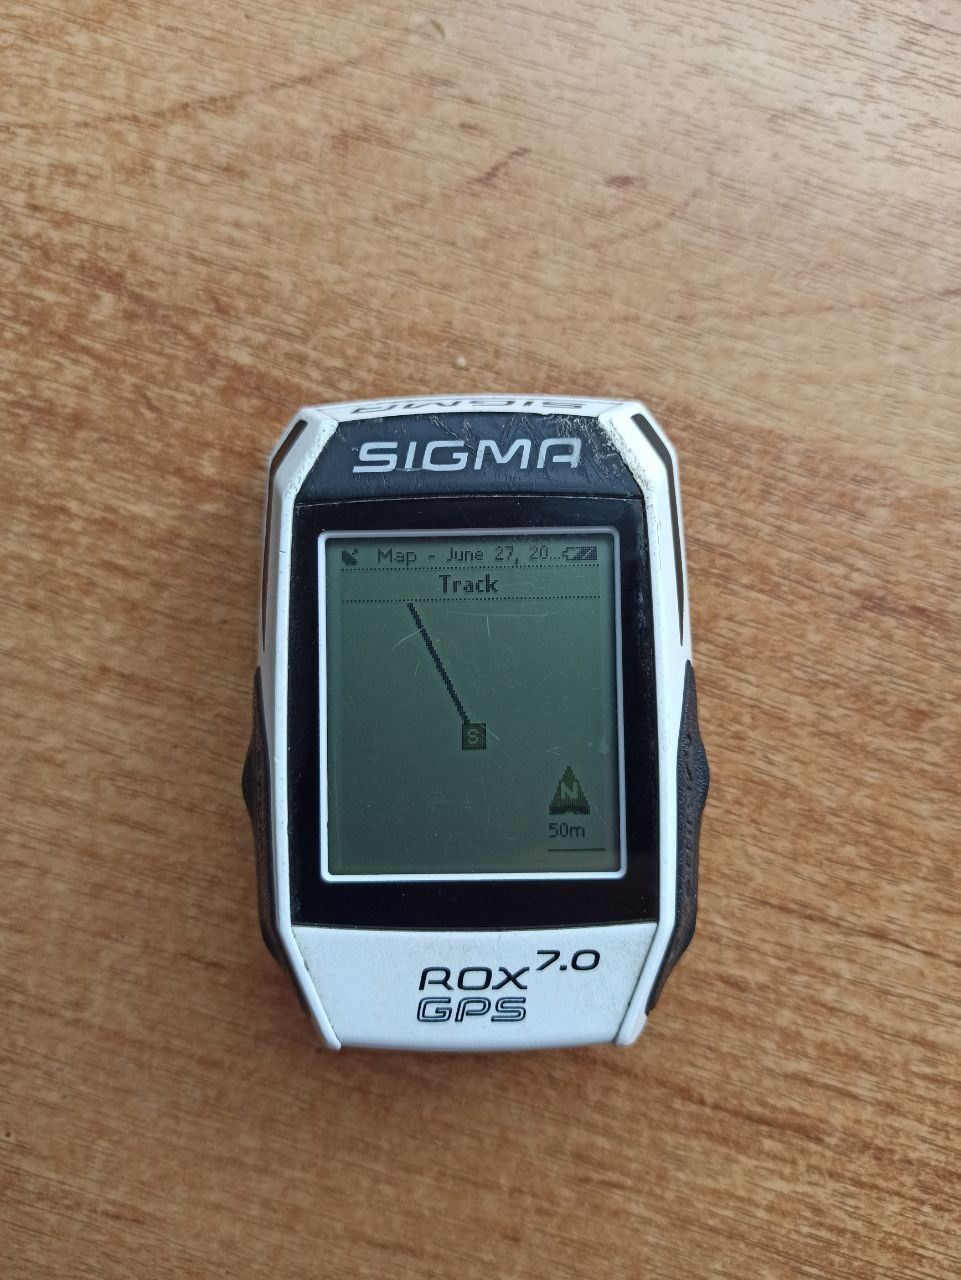 Sigma ROX 7.0 GPS